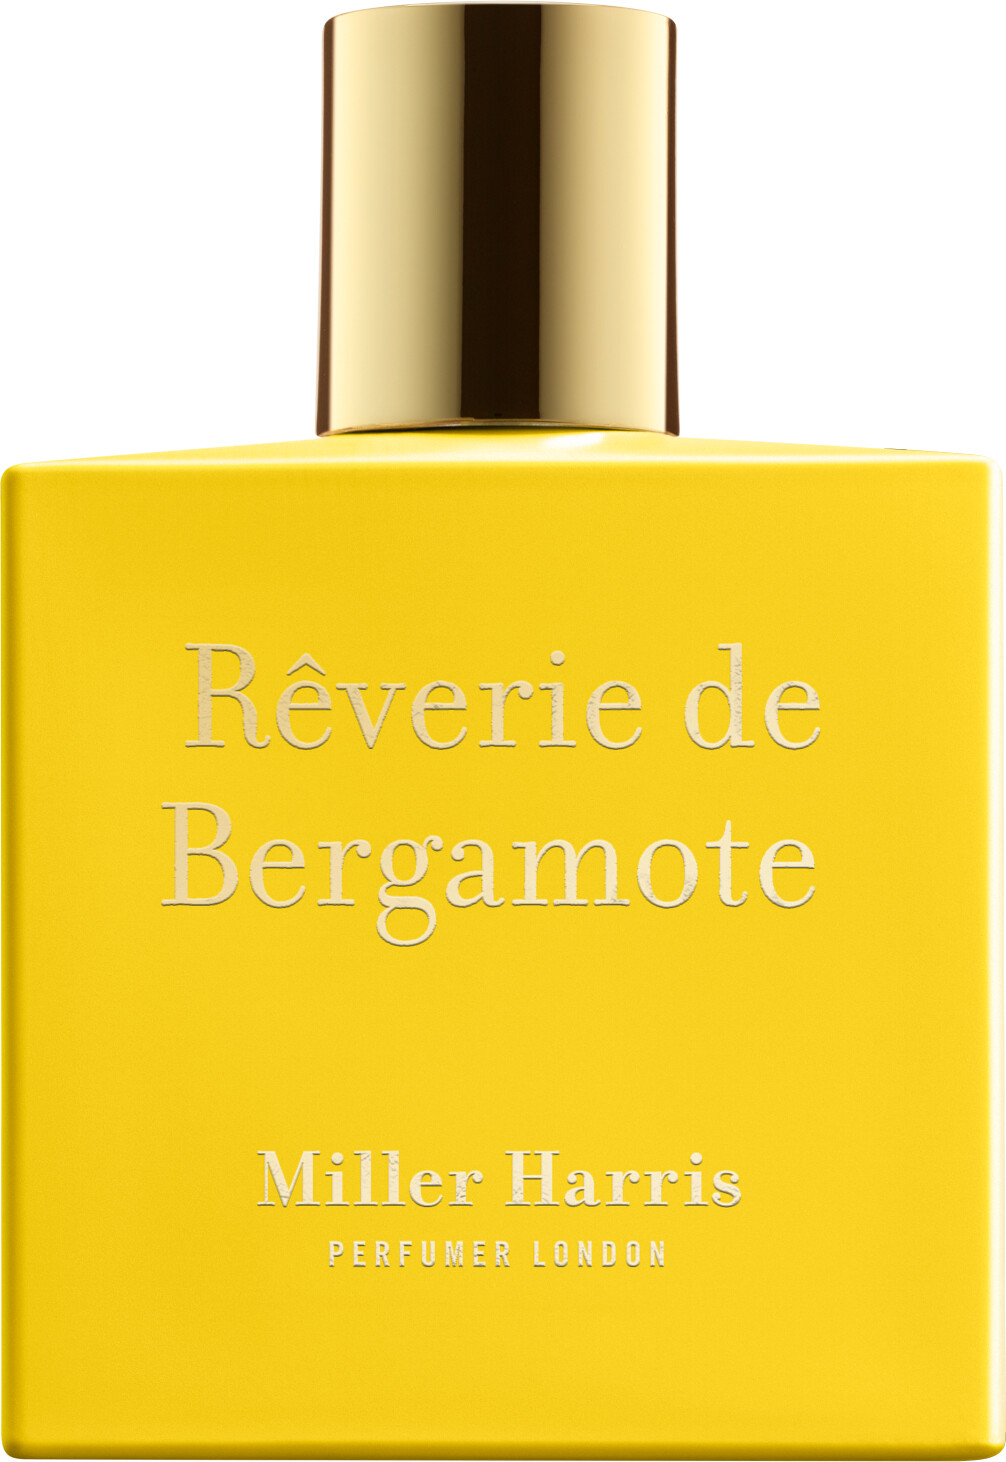 Miller Harris Reverie de Bergamote Eau de Parfum Spray 50ml